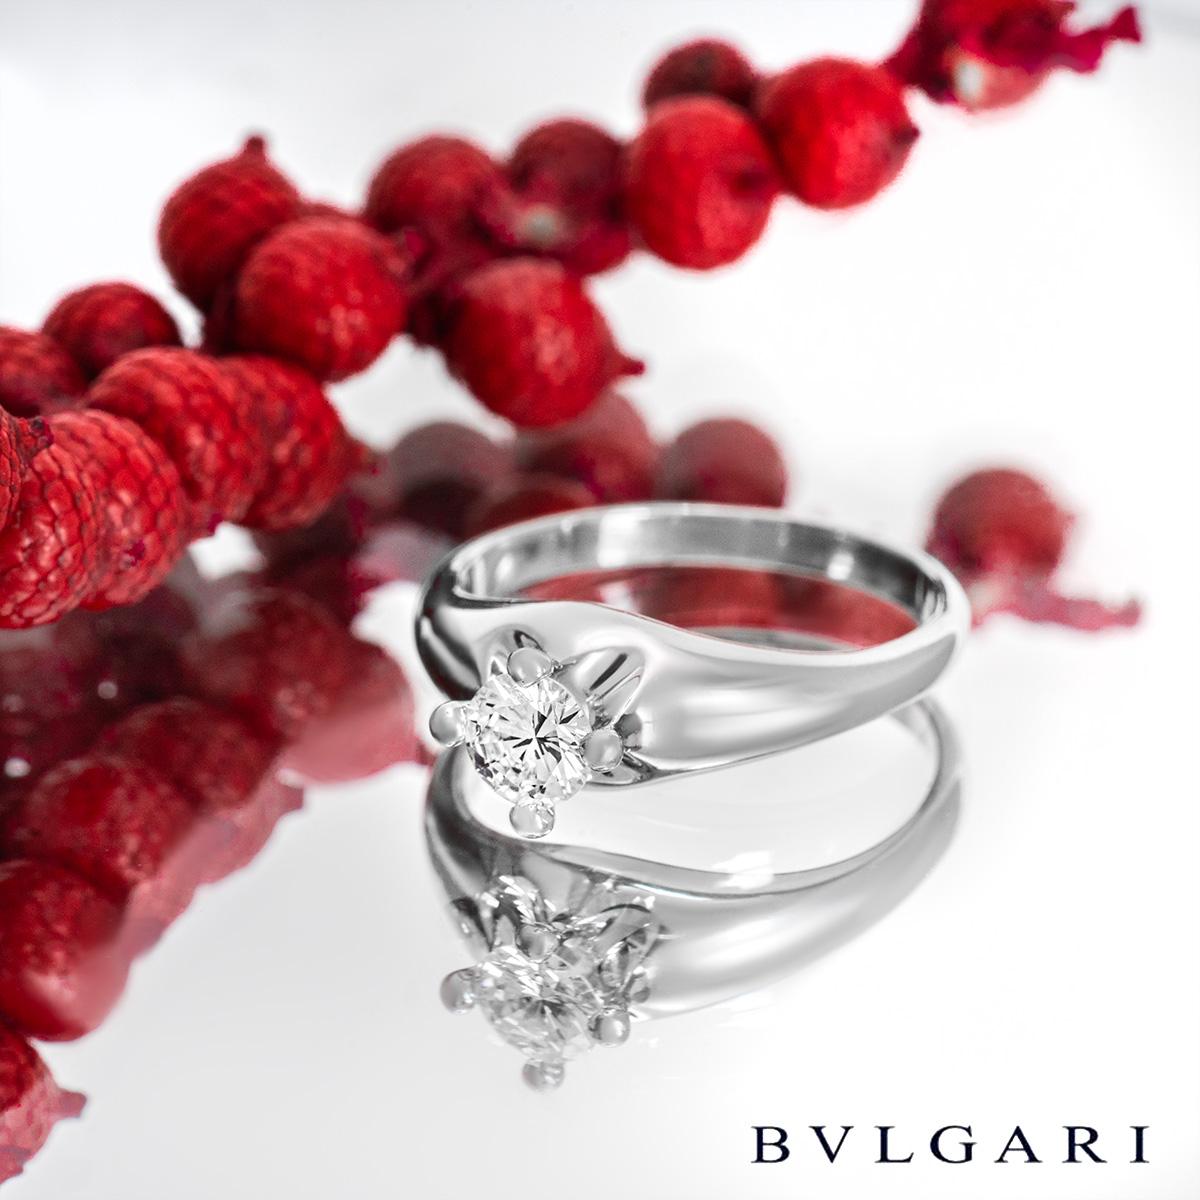 Women's Bvlgari Round Brilliant Cut Diamond Ring in Platinum 0.35ct G/VVS2 For Sale